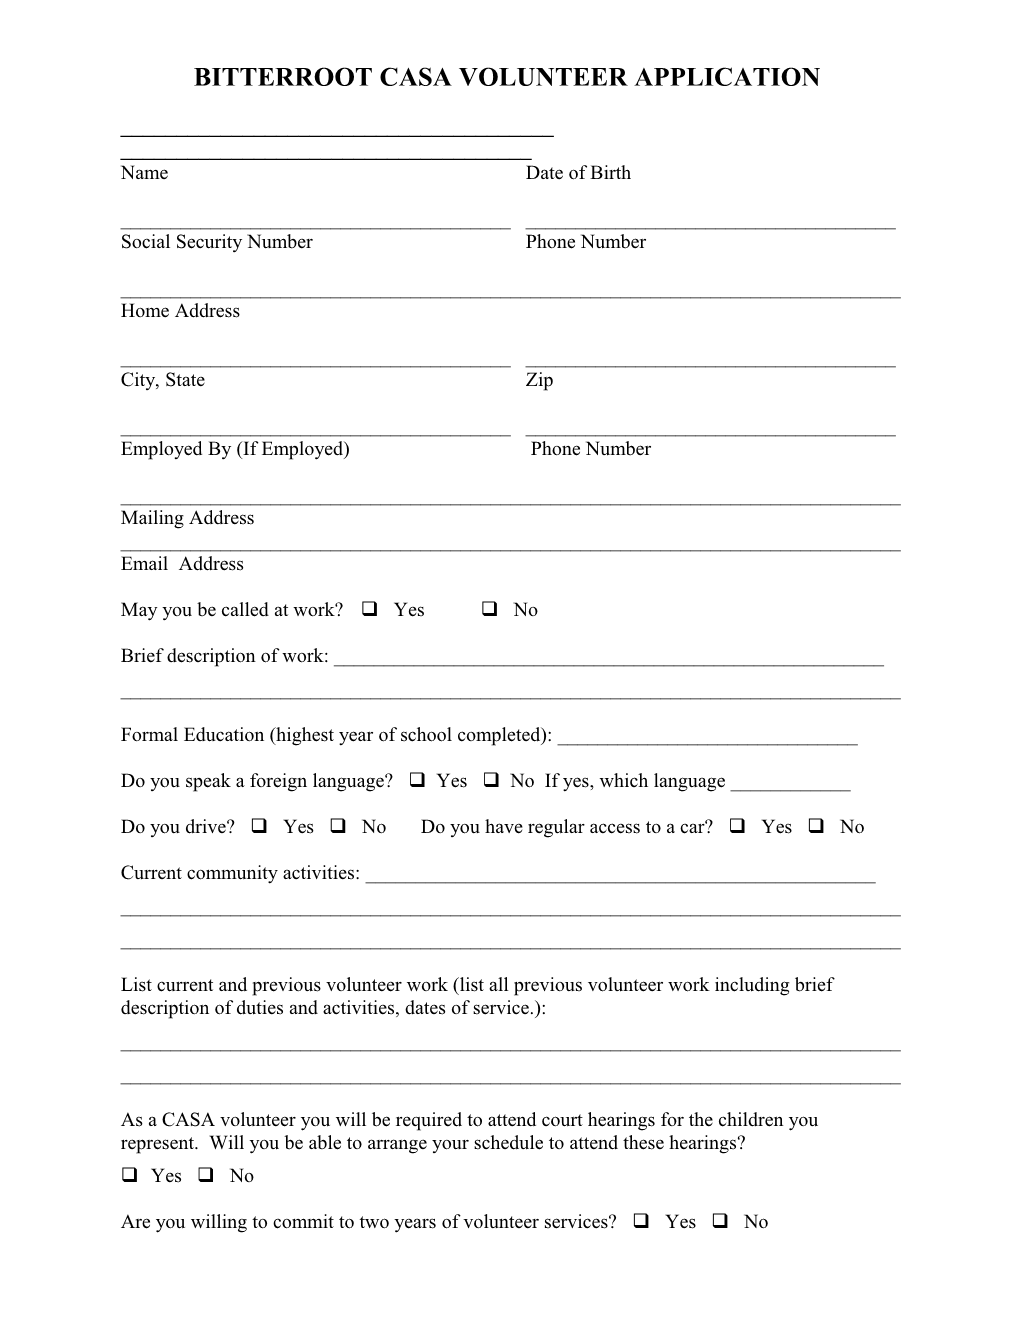 Sample Volunteer Application Form